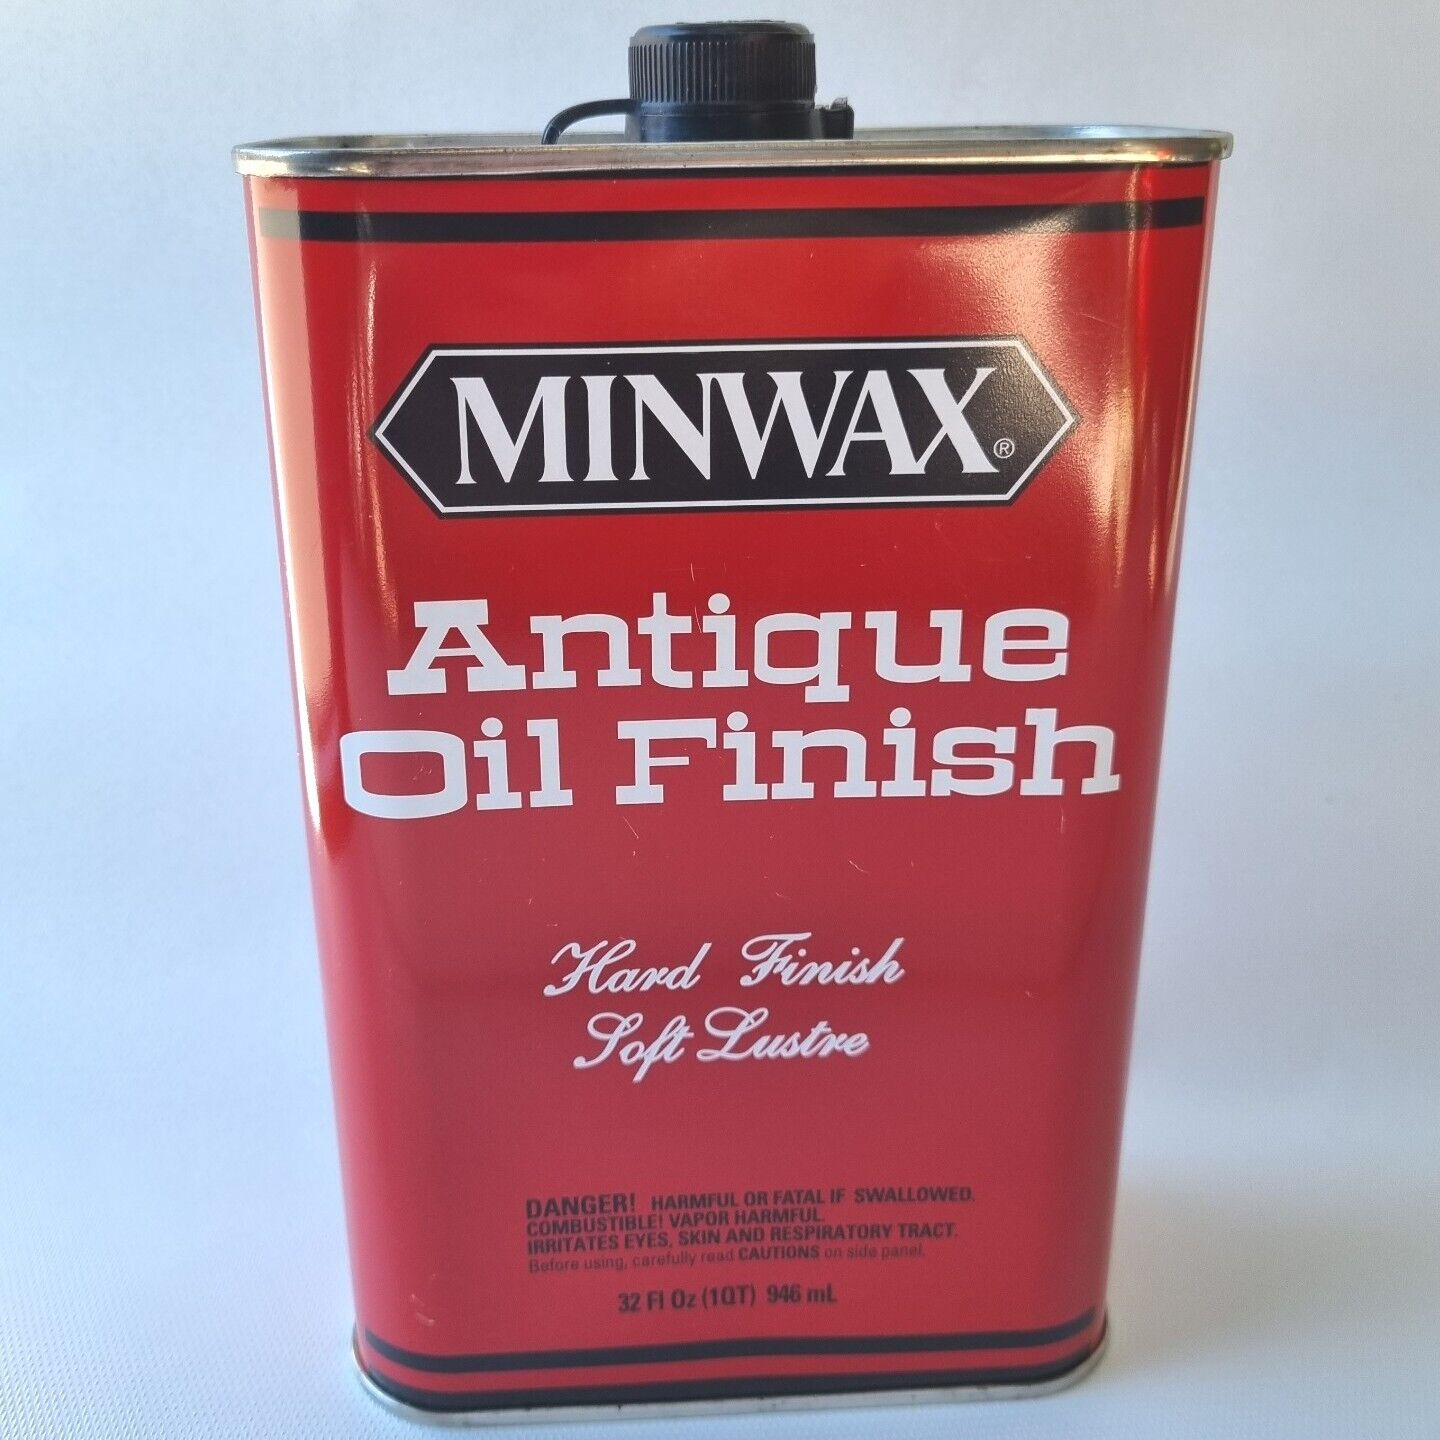 Minwax 67000 Antique Oil Finish QUART 32 oz Hard Finish Soft Lustre DISCONTINUED